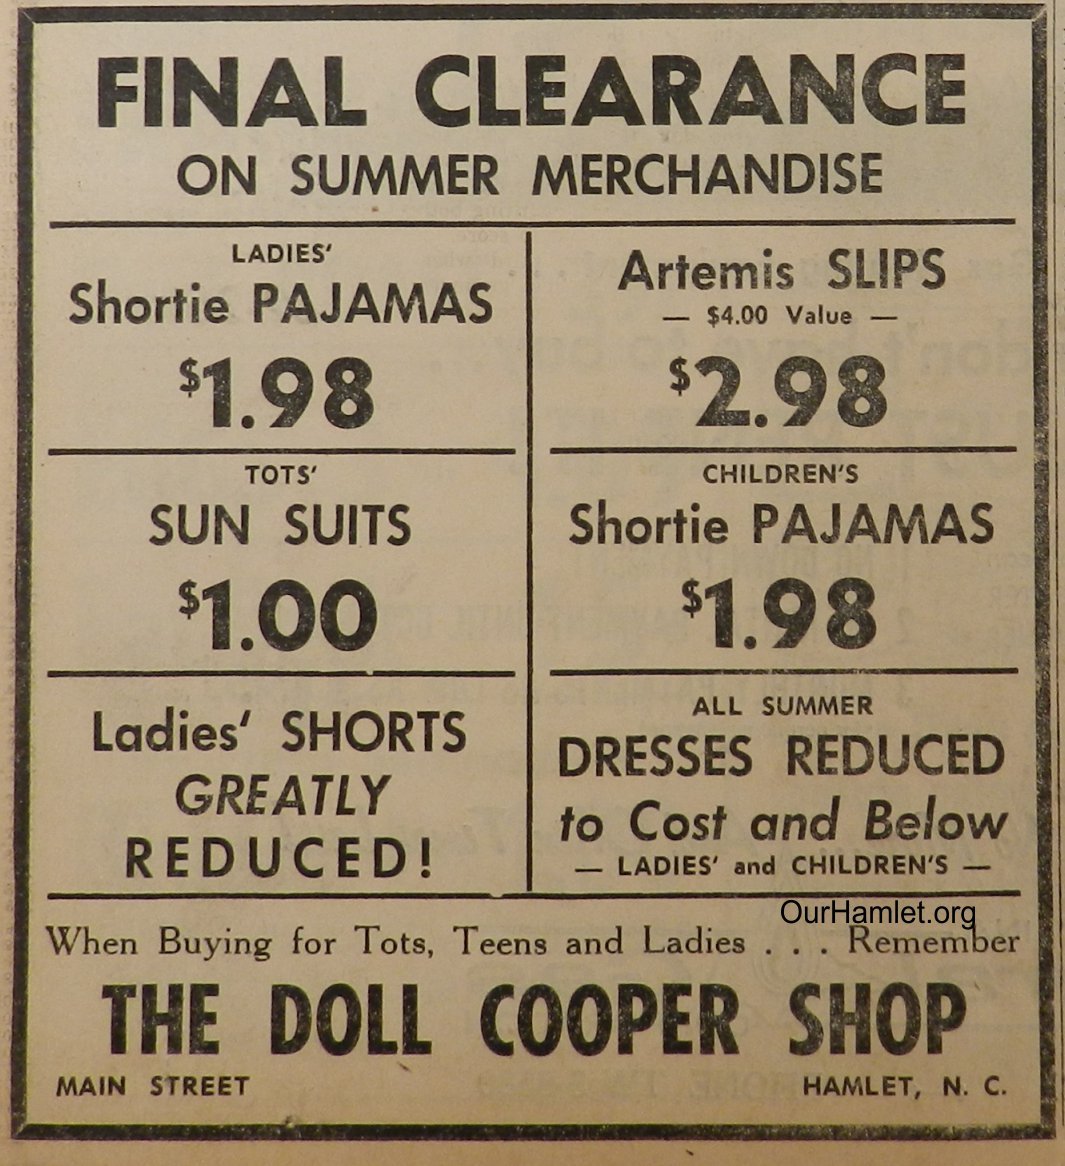 1961 Doll Cooper Shop OH.jpg